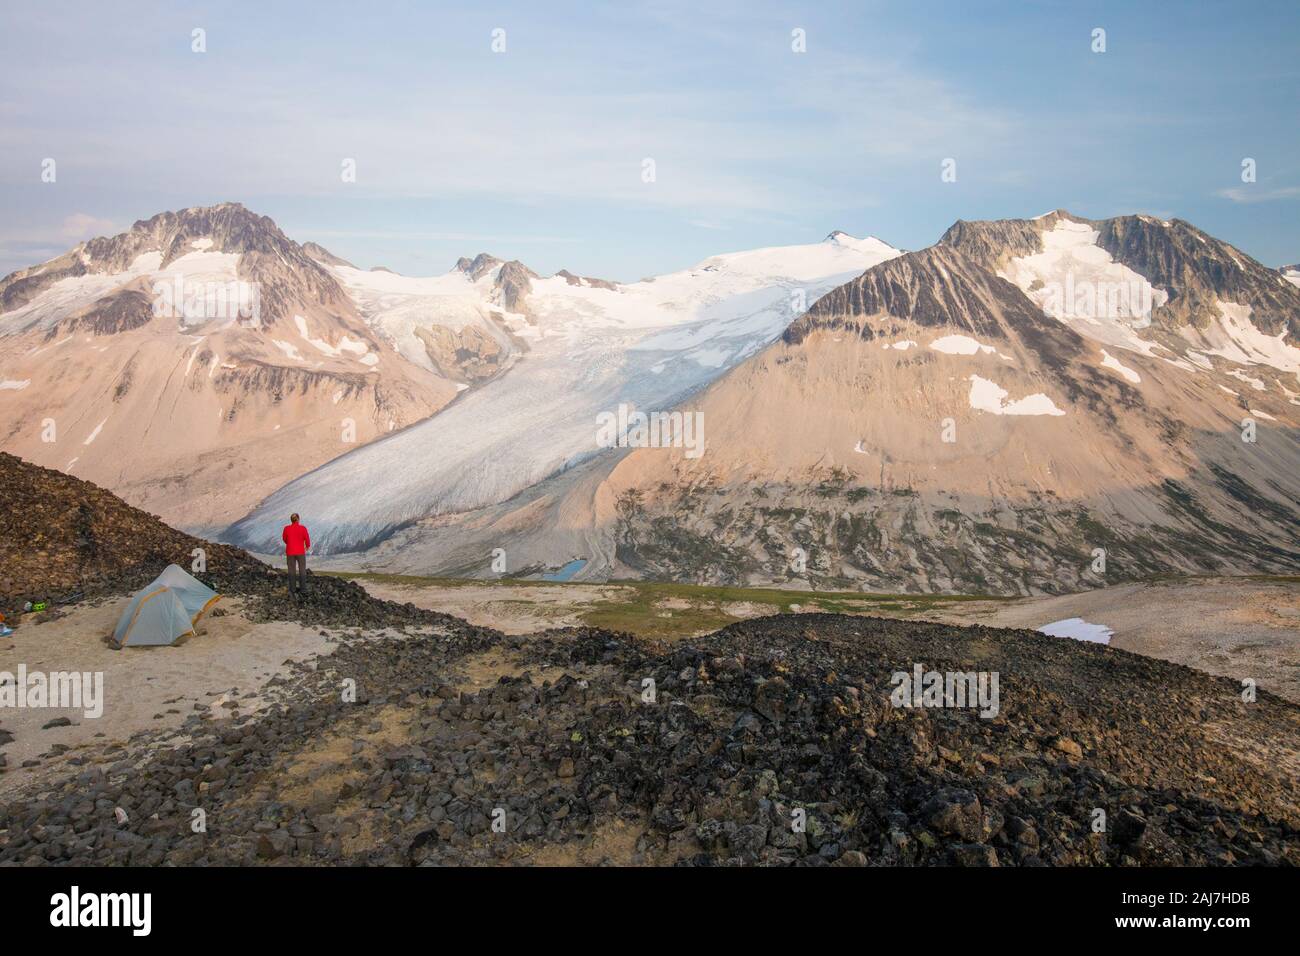 Hiker camping on mountain summit. Stock Photo